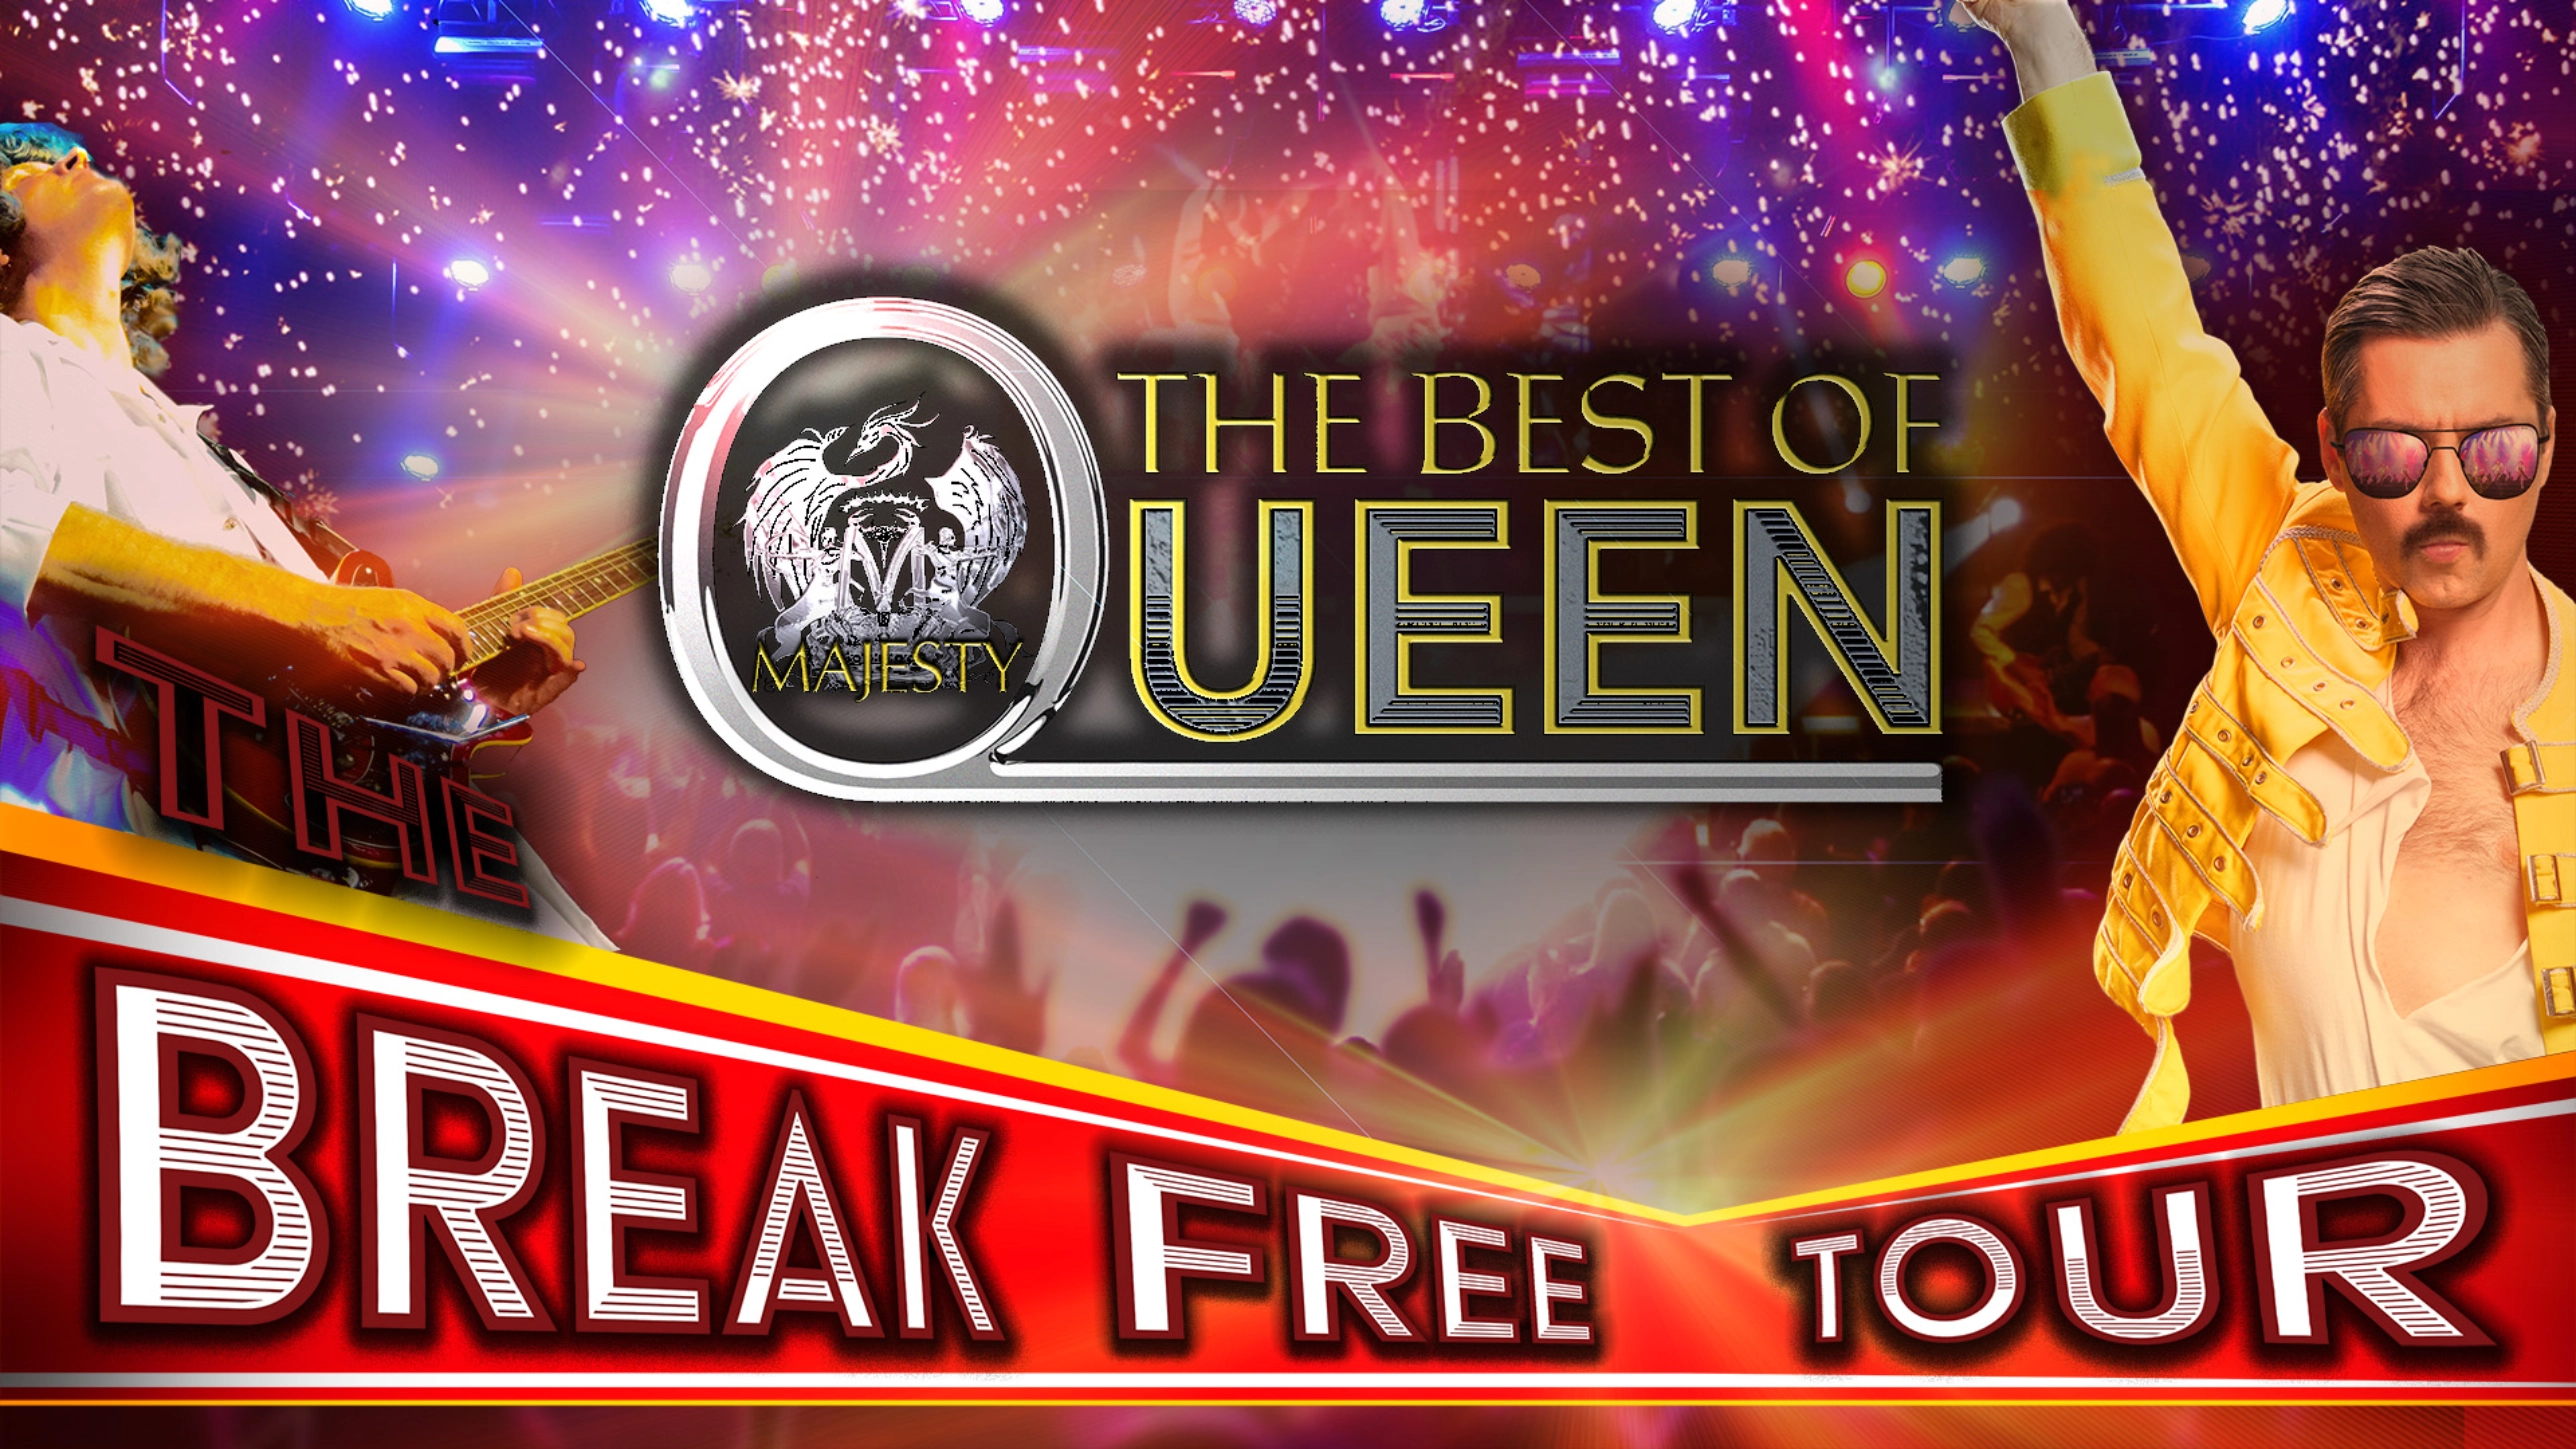 The Best of Queen Performed by Break Free